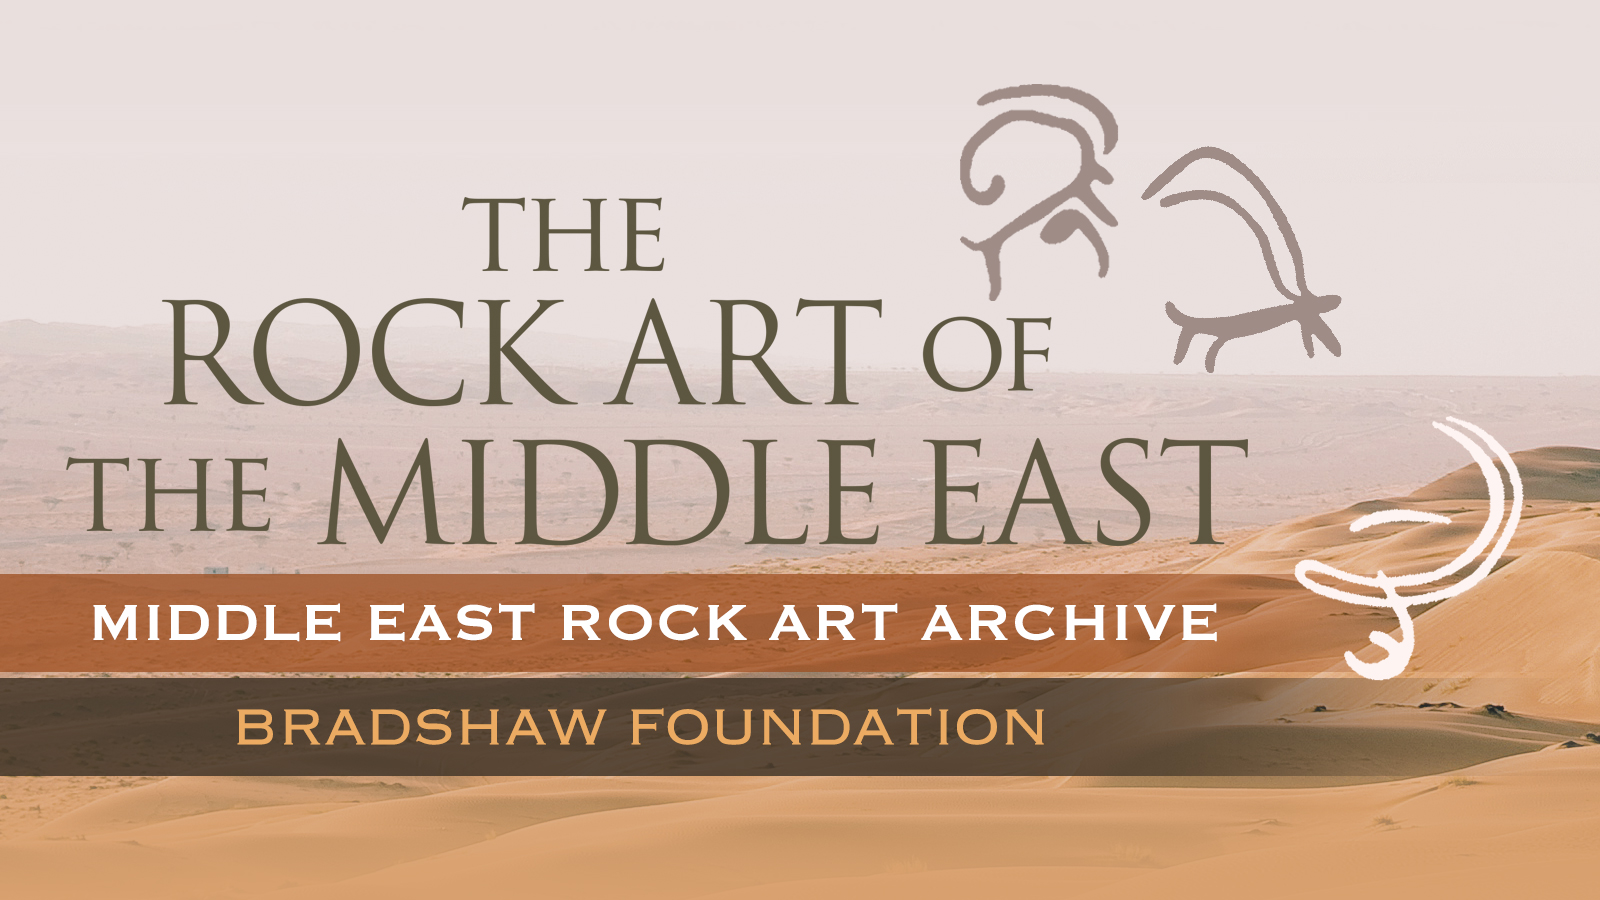 The Rock Art of Saudi Arabia Bradshaw Foundation